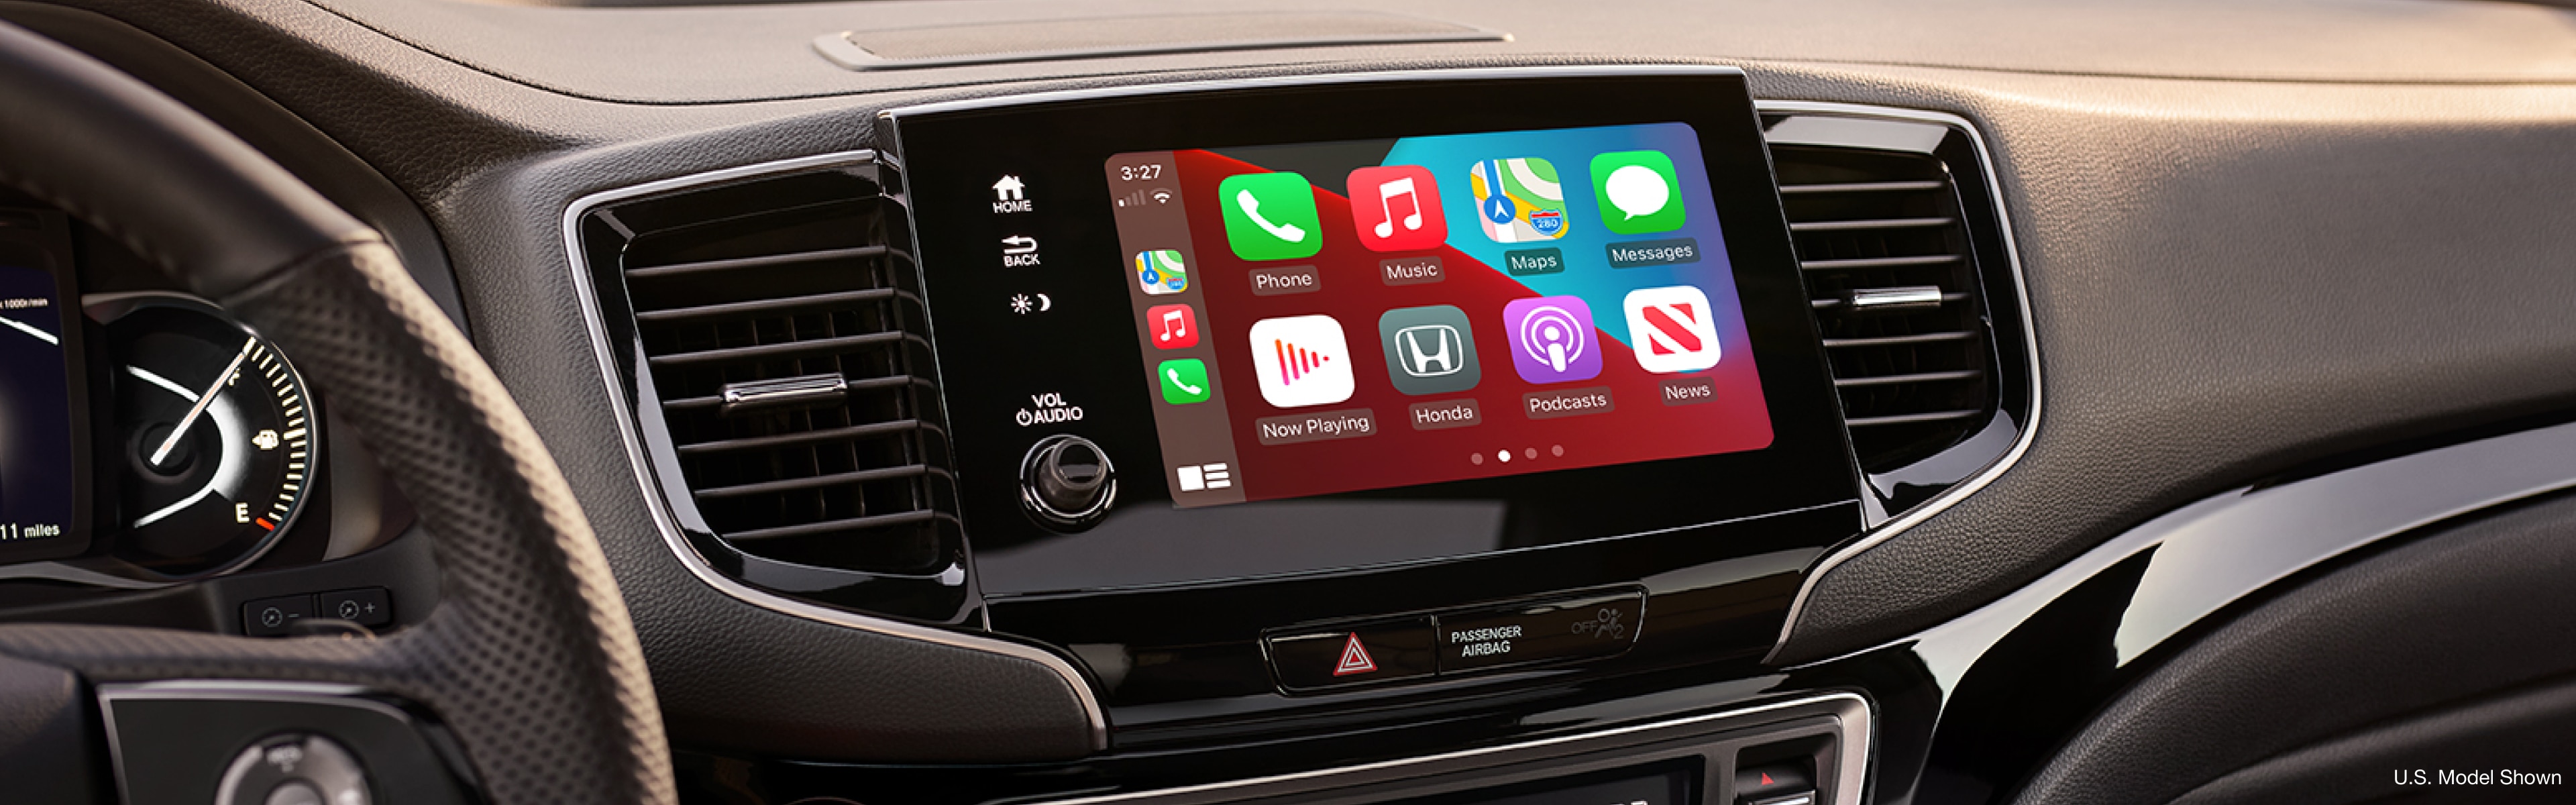 Interior front dashboard view of 2022 Honda Passport Apple CarPlay™ feature.